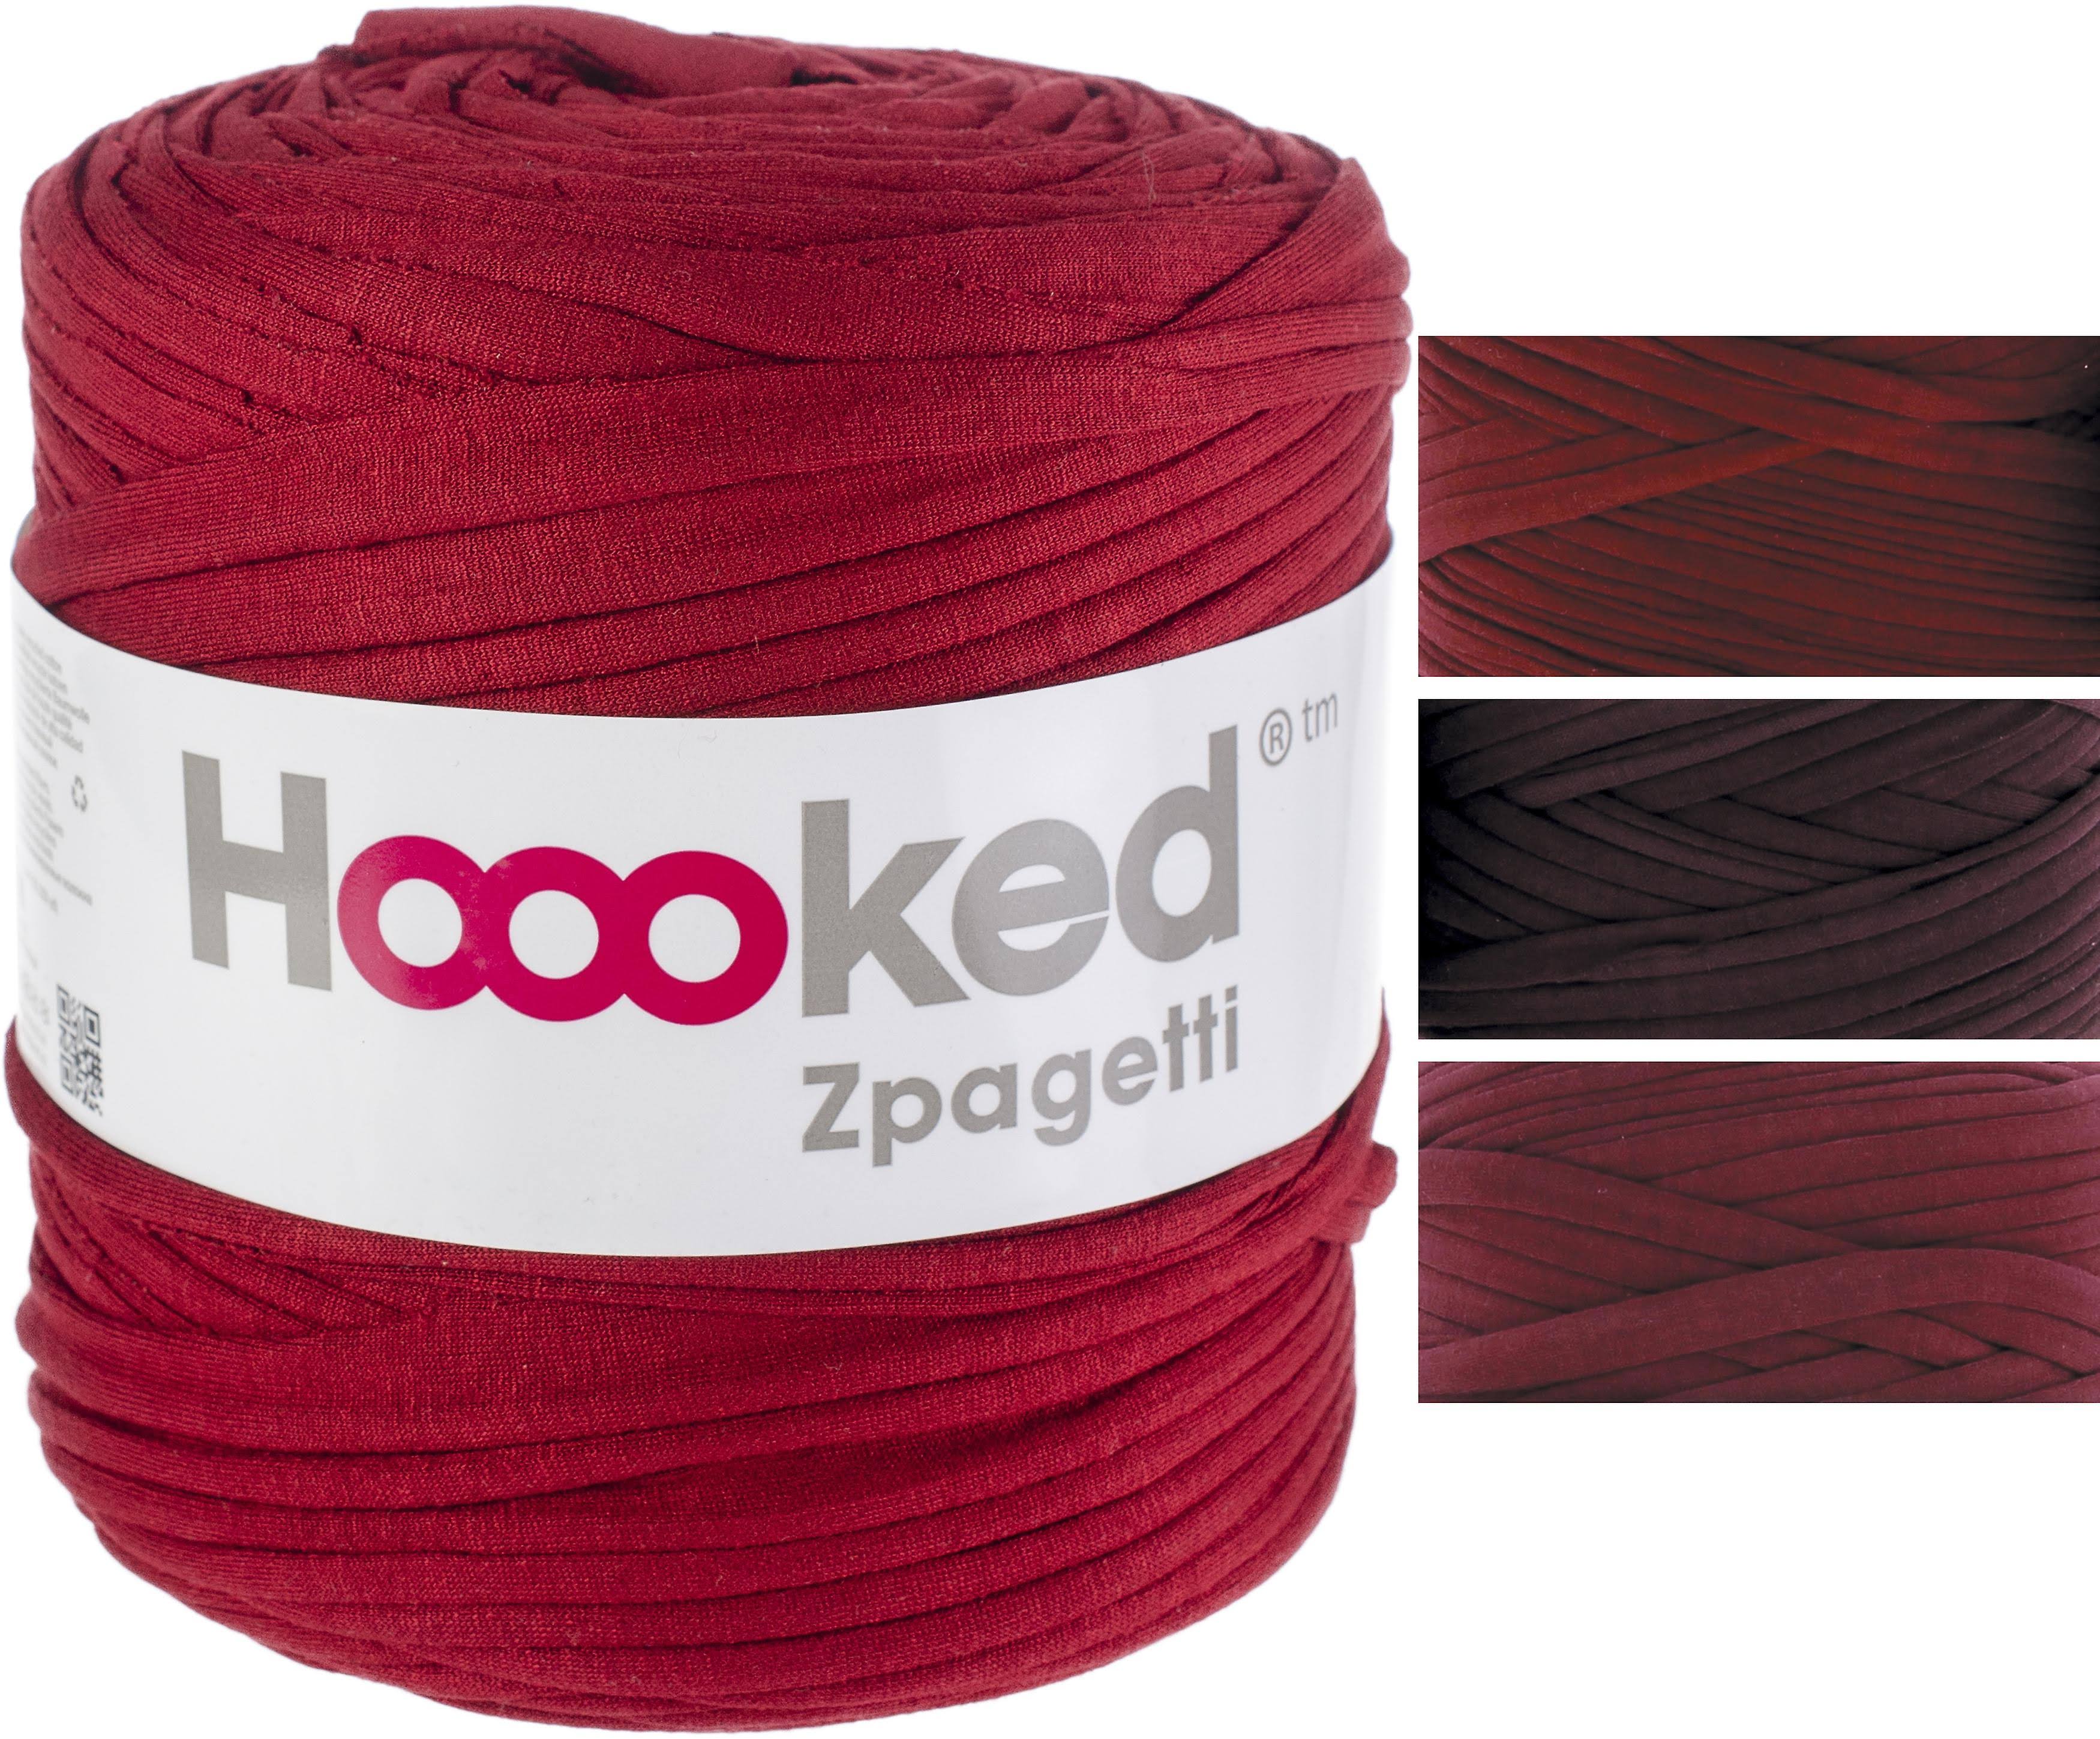 Hoooked Zpagetti Yarn - Burgundy Passion*